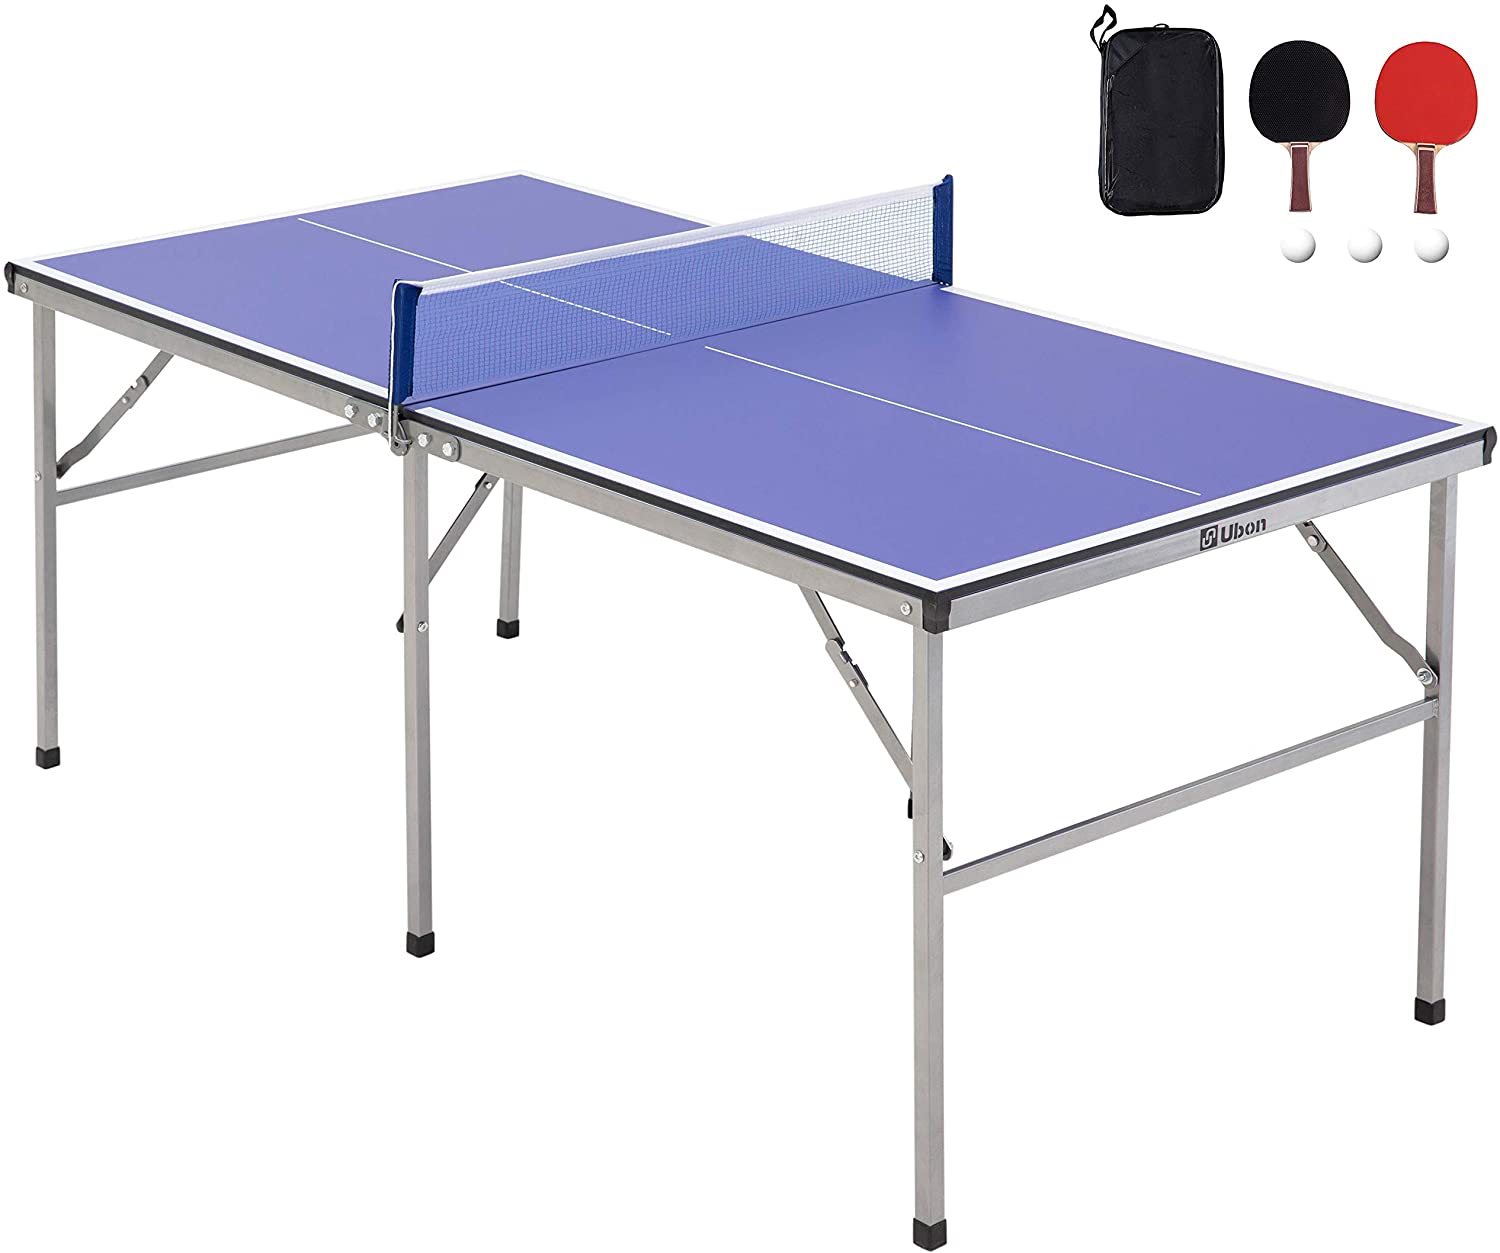 Torneo invite стол теннисный. Sunflex Outdoor 105 теннисный стол. Стол теннисный 61020. Мини стол для настольного тенниса Torneo. Сборка теннисного стола